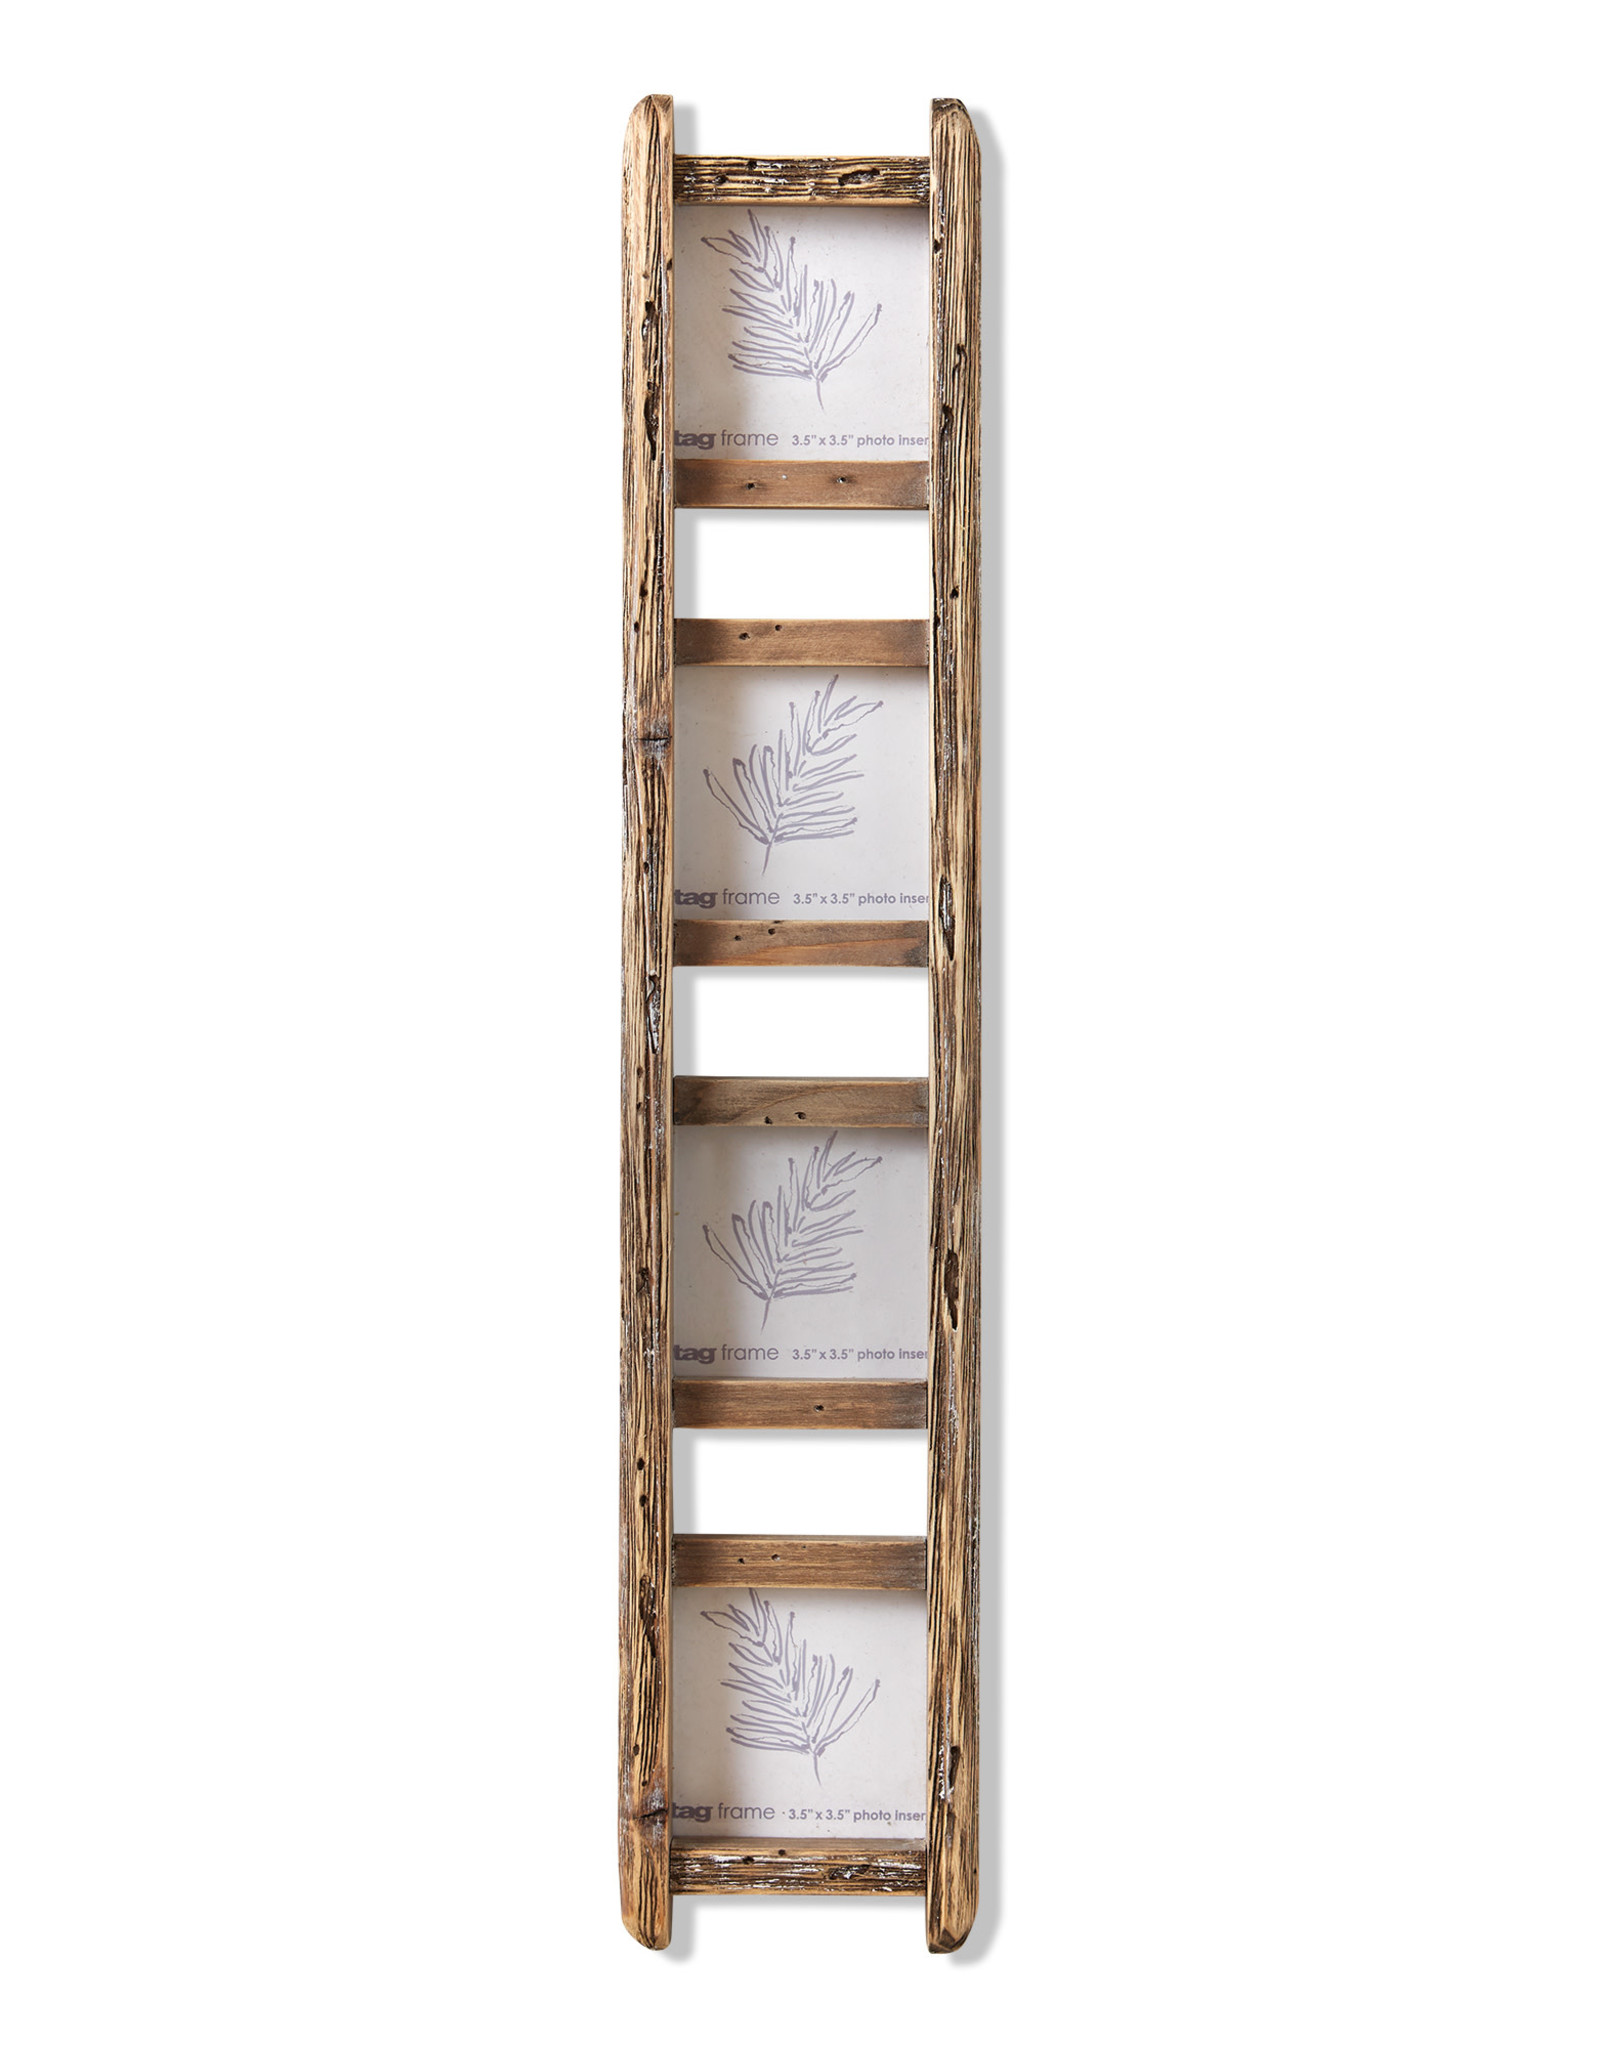 Tag Ladder Photo Frame